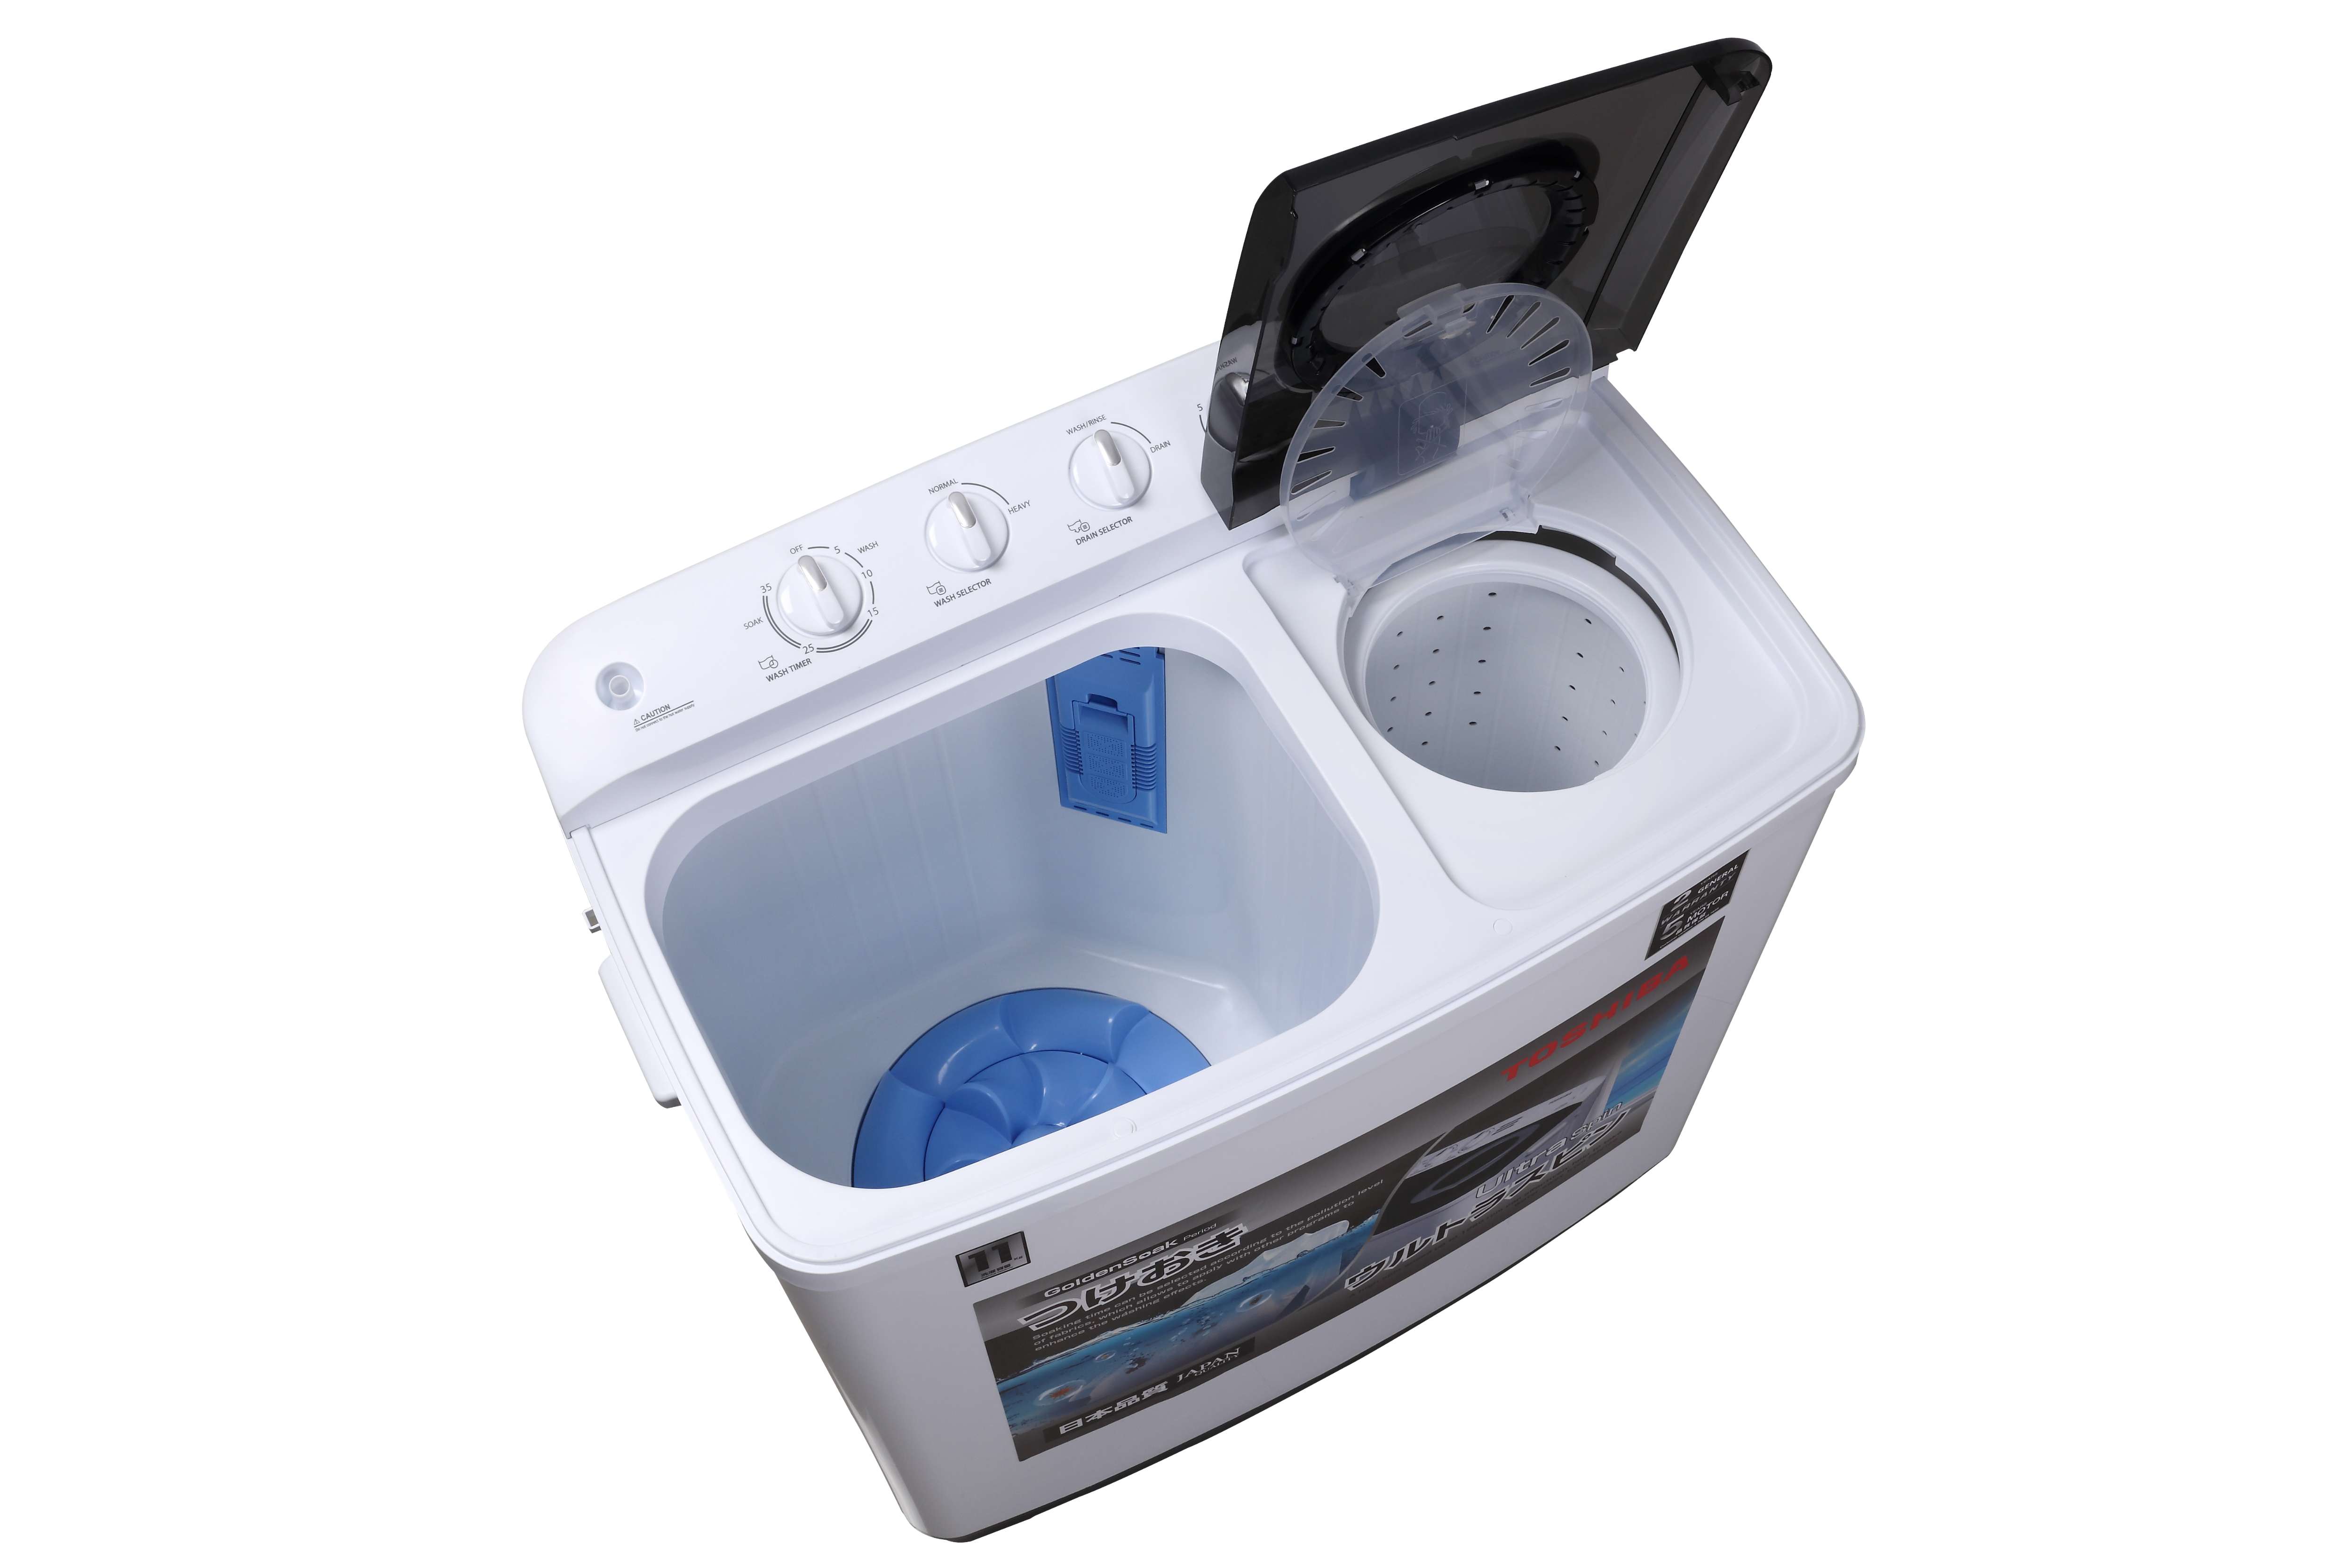 Toshiba Twin Tub Washing Machine | Details Matter